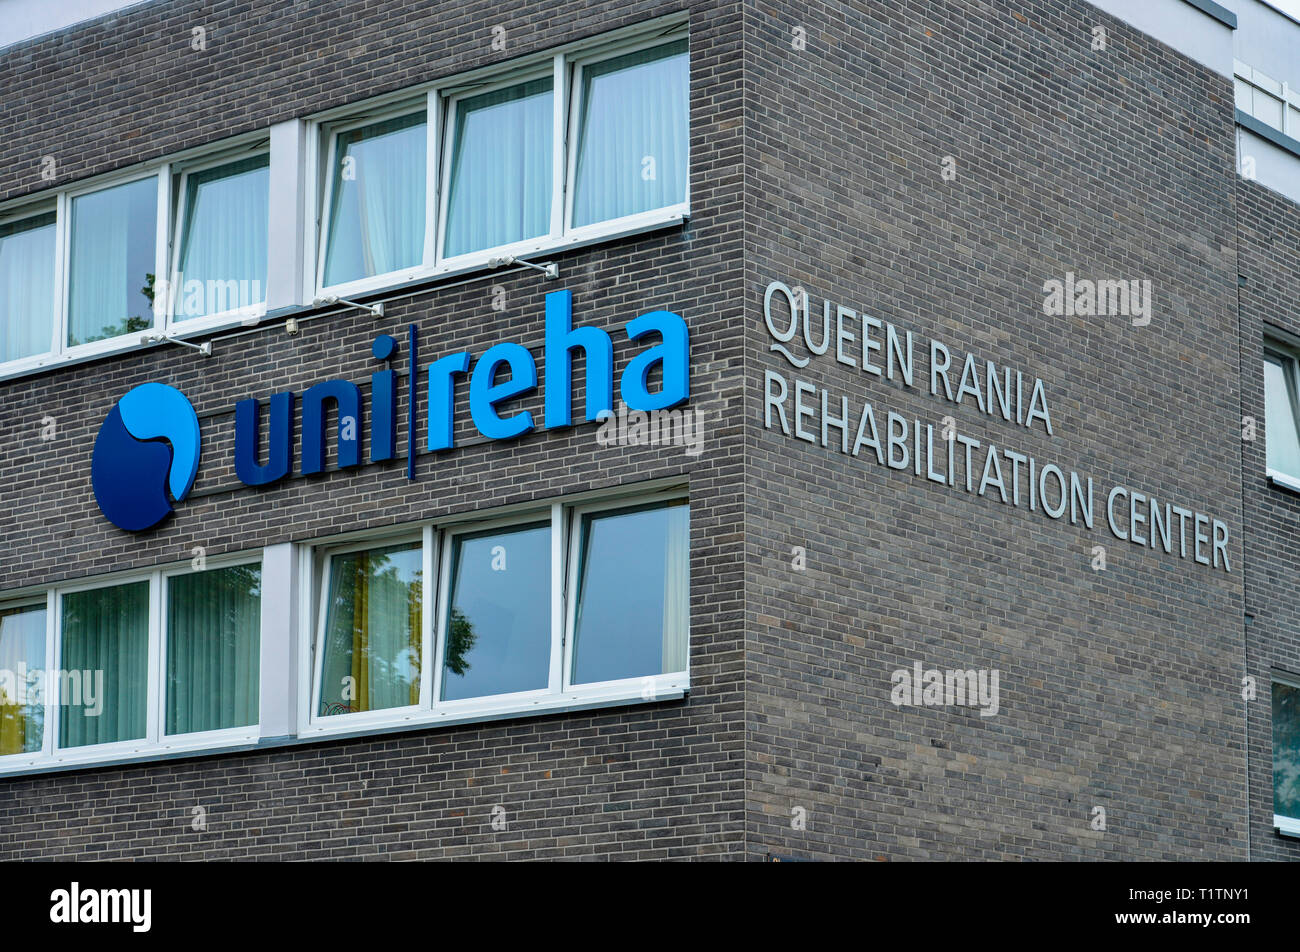 La Reina Rania Centro de Rehabilitación, Lindenburger Allee, Koeln, Nordrhein-Westfalen, Deutschland Foto de stock